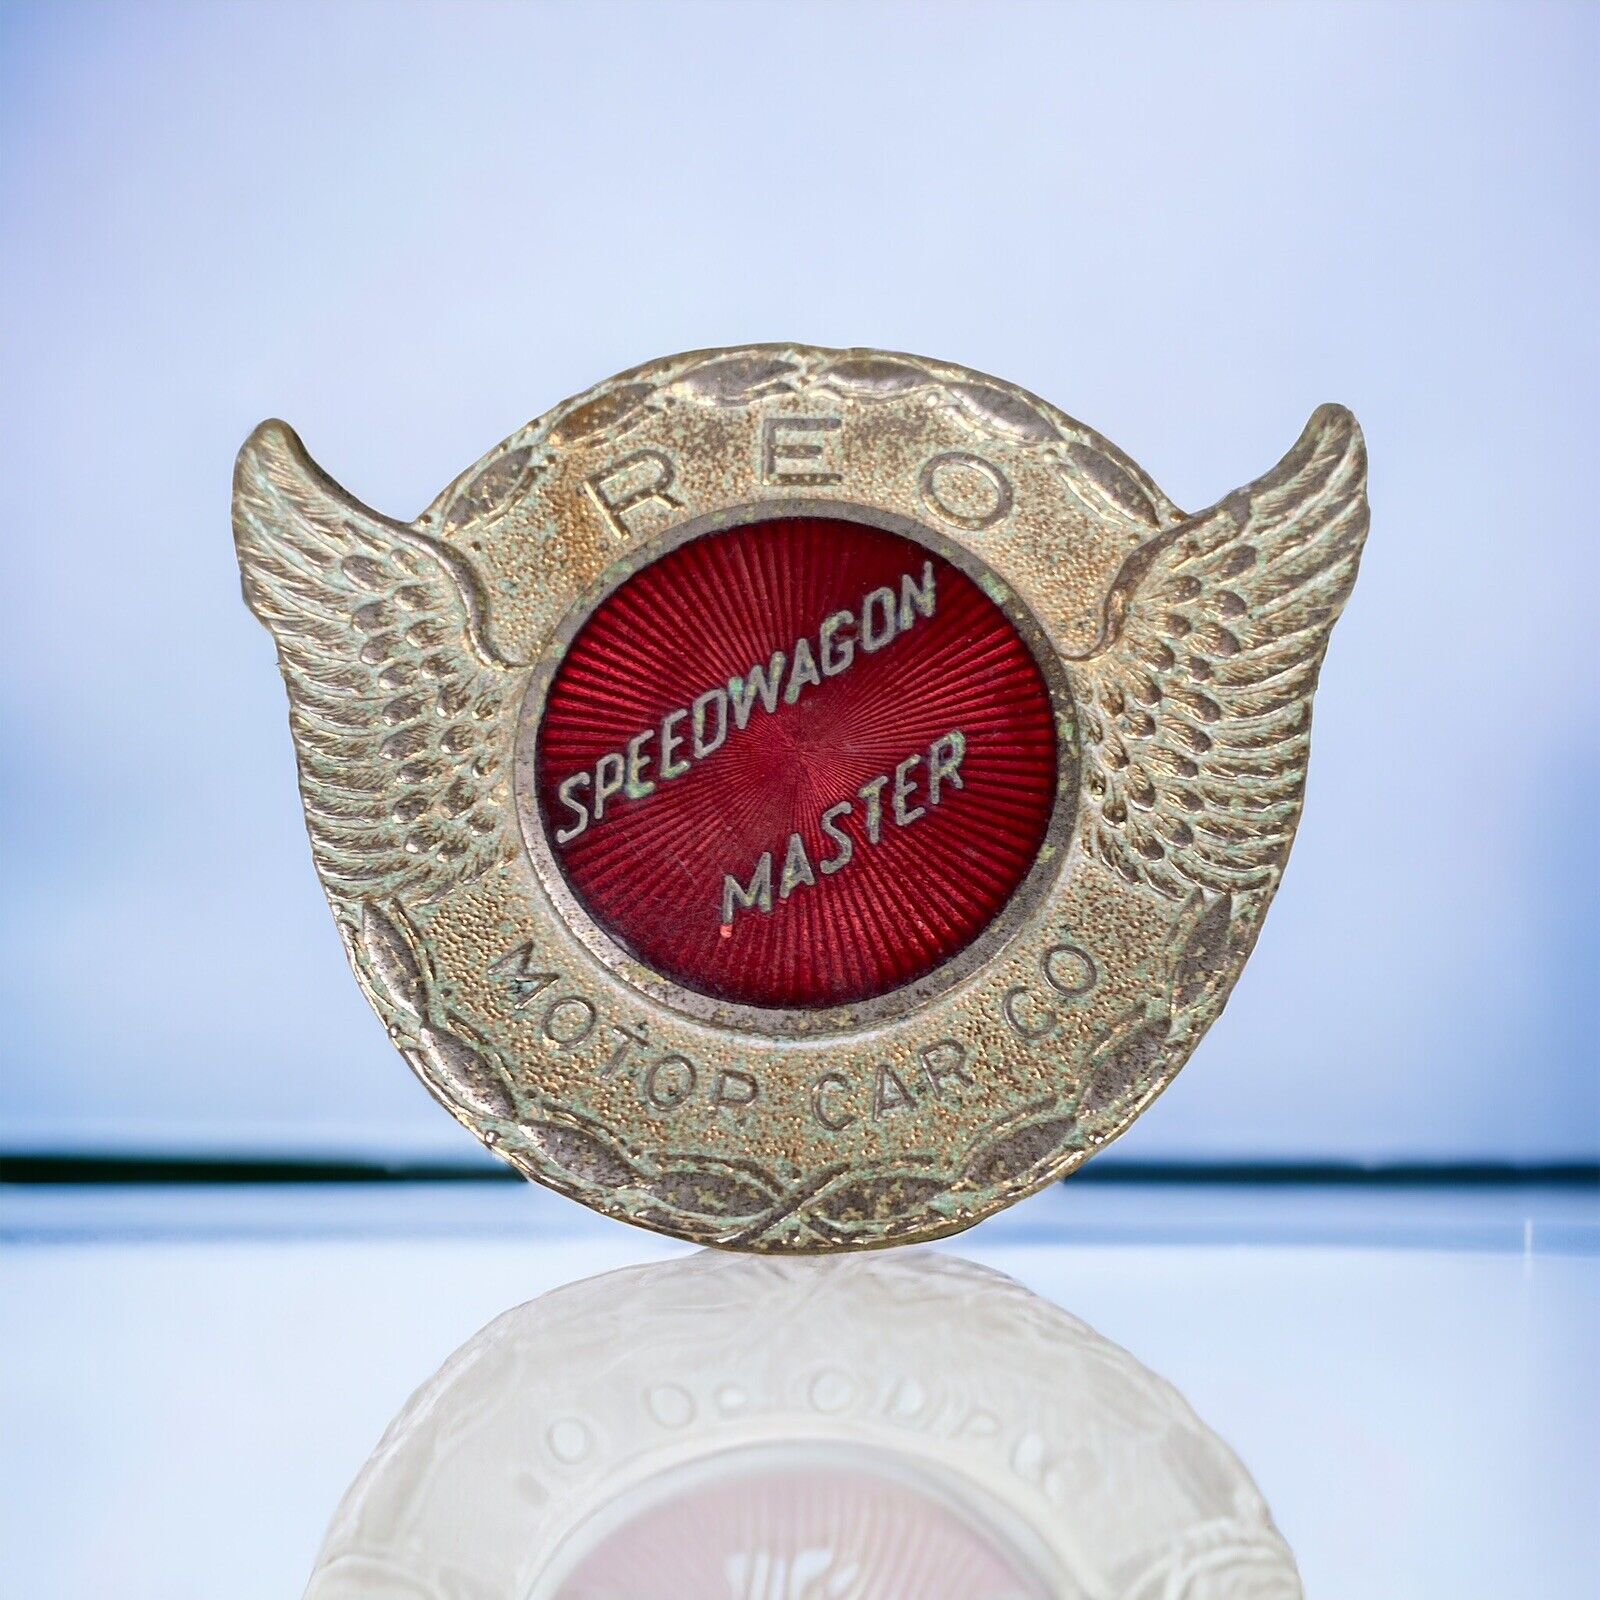 REO Speedwagon Master Grille Radiator Emblem Badge 1927 1928 1929 Closionne 3